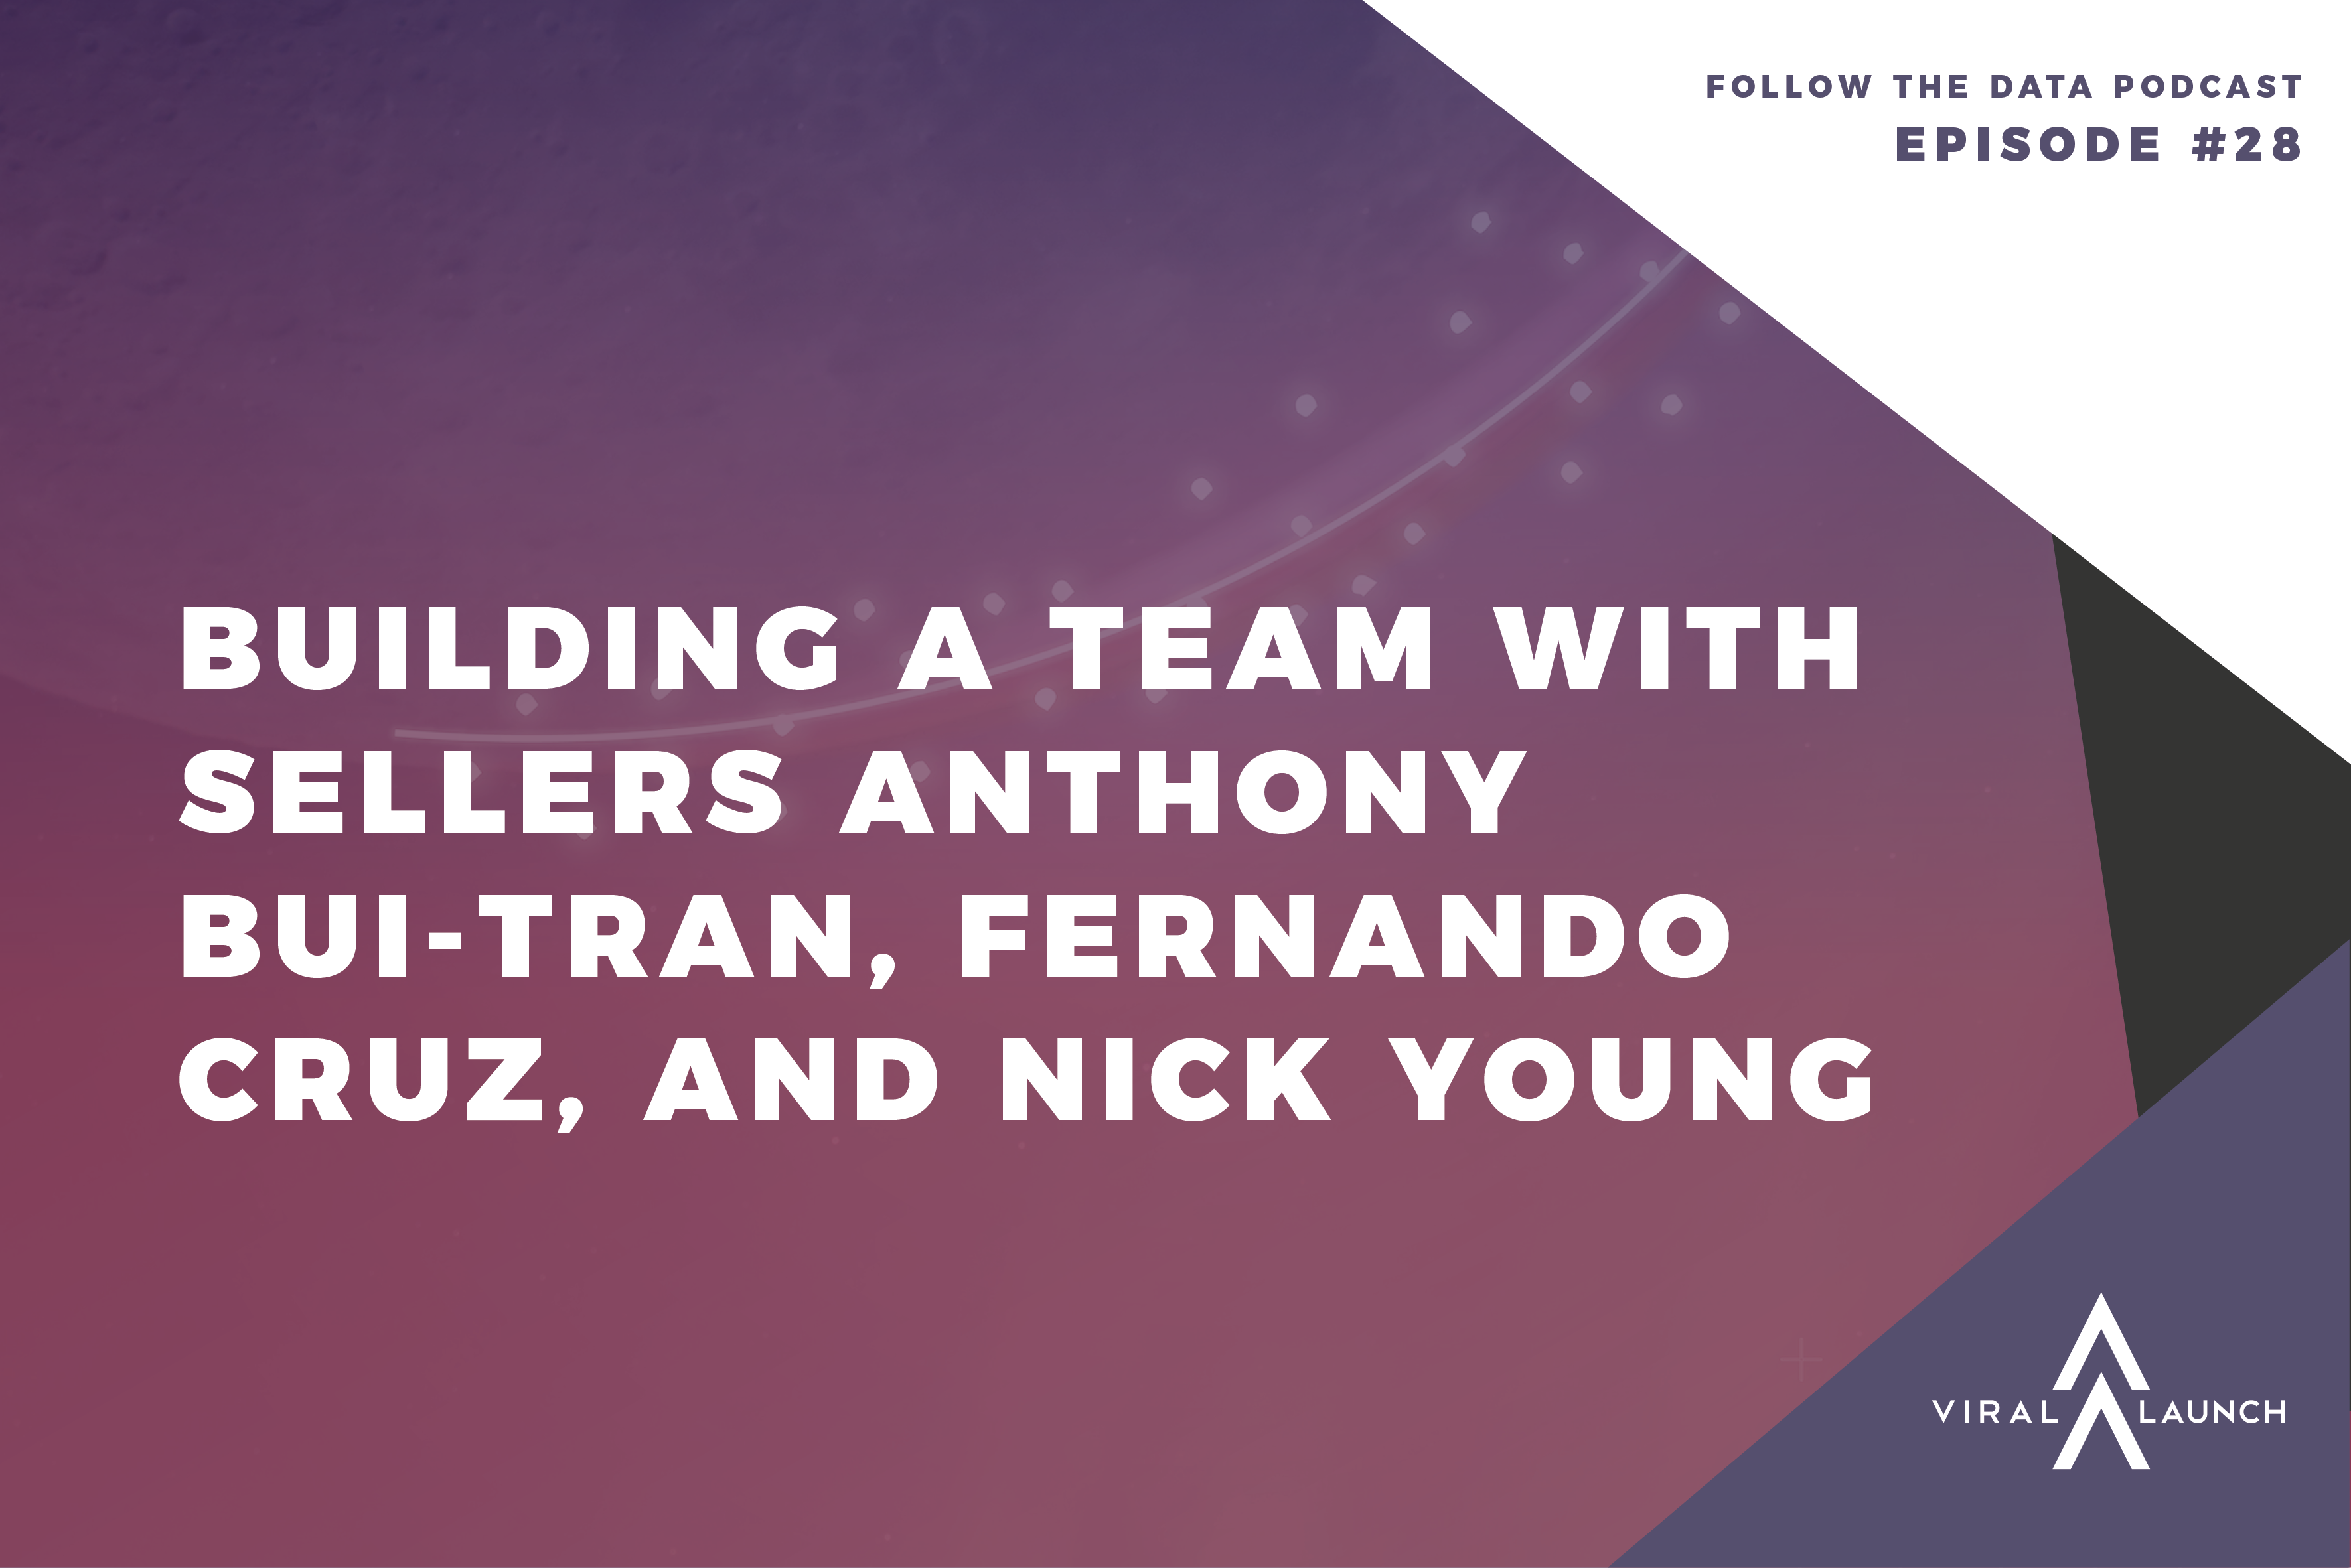 Building a Team with Anthony Bui-Tran Fernando Cruz and Nick Young